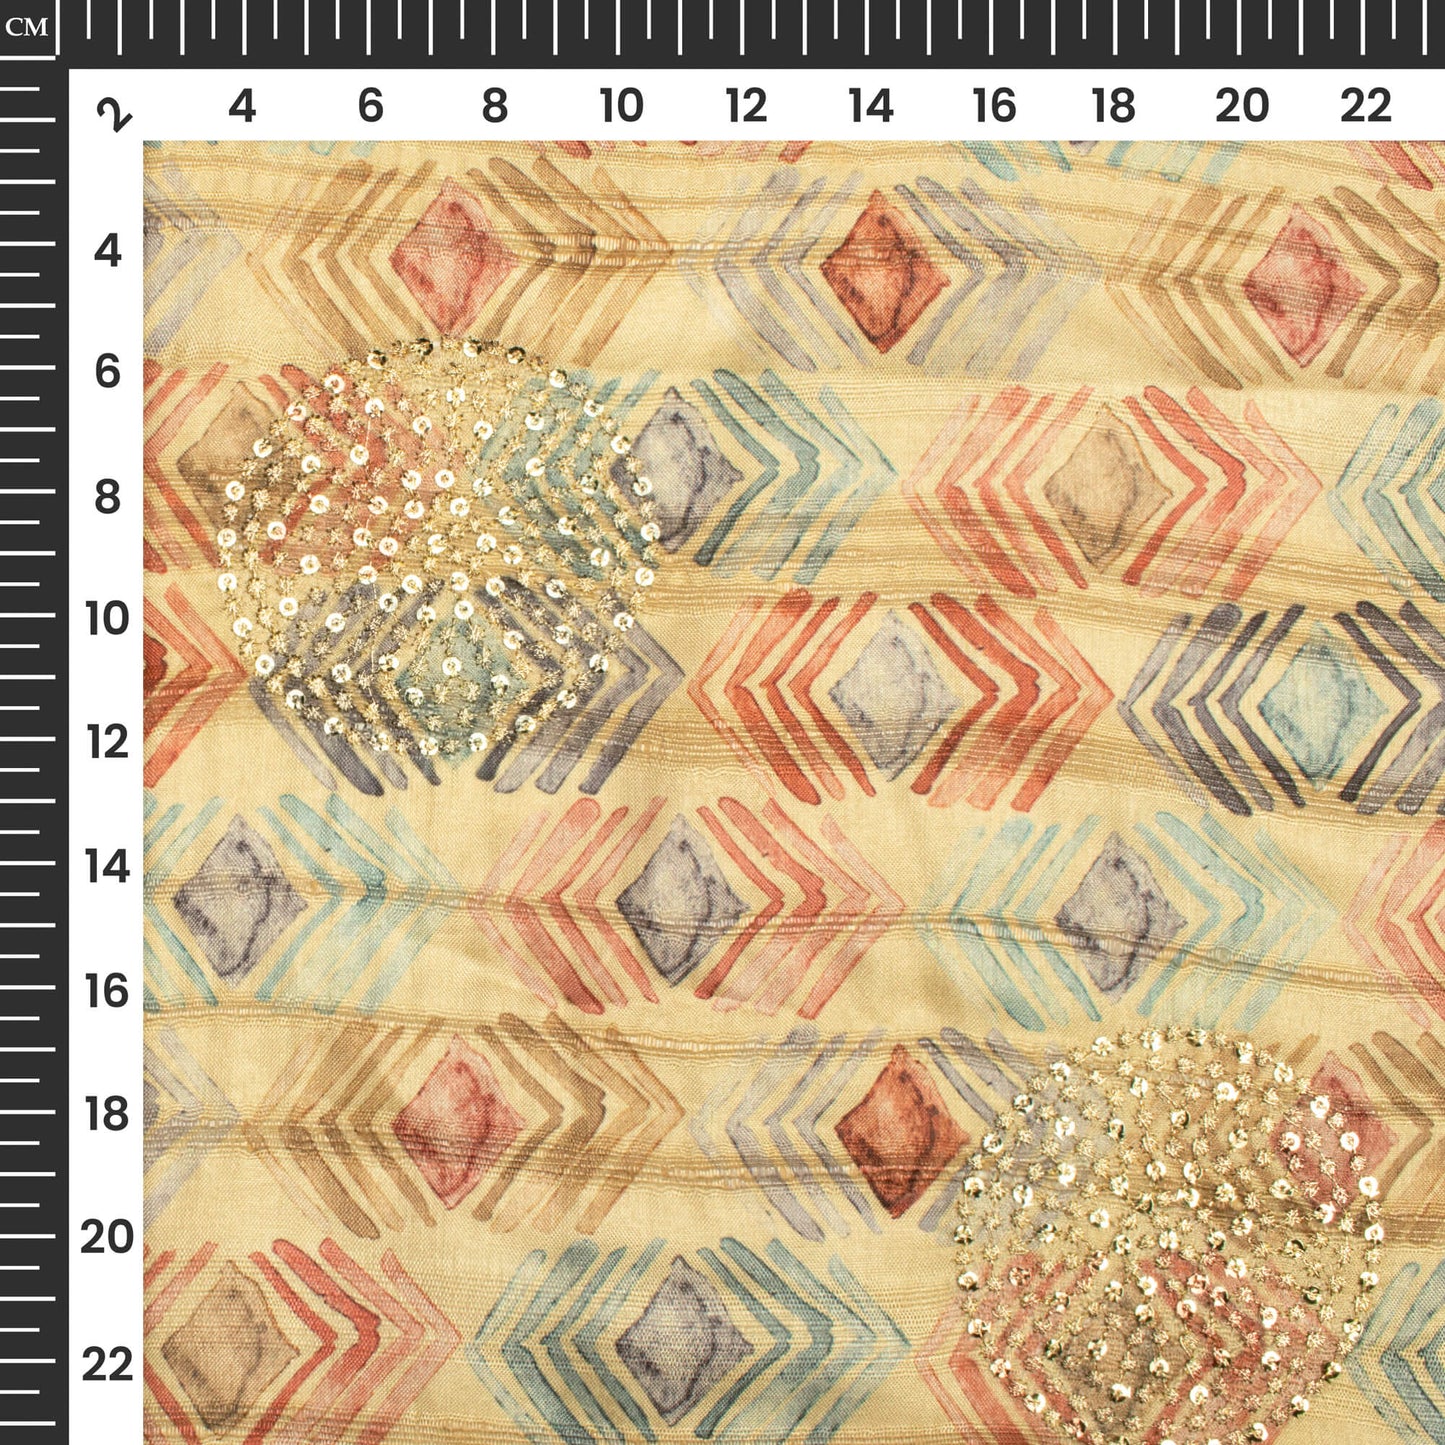 Flaxen Yellow Geometric Digital Print Butta Sequins Embroidery On Heritage Art Silk Fabric